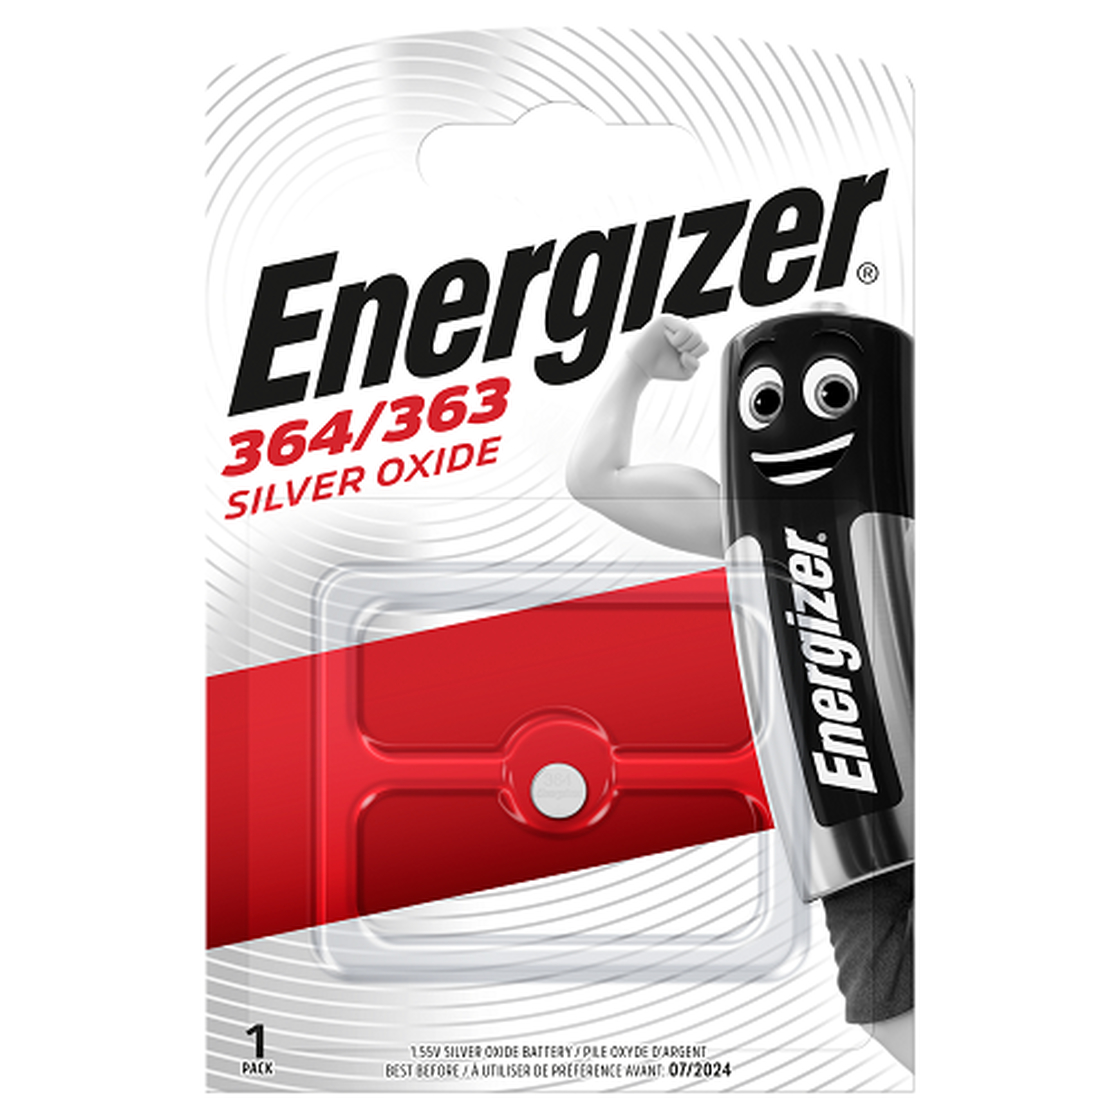 Energizer Uhrenbatterie Silberoxyd 364/363